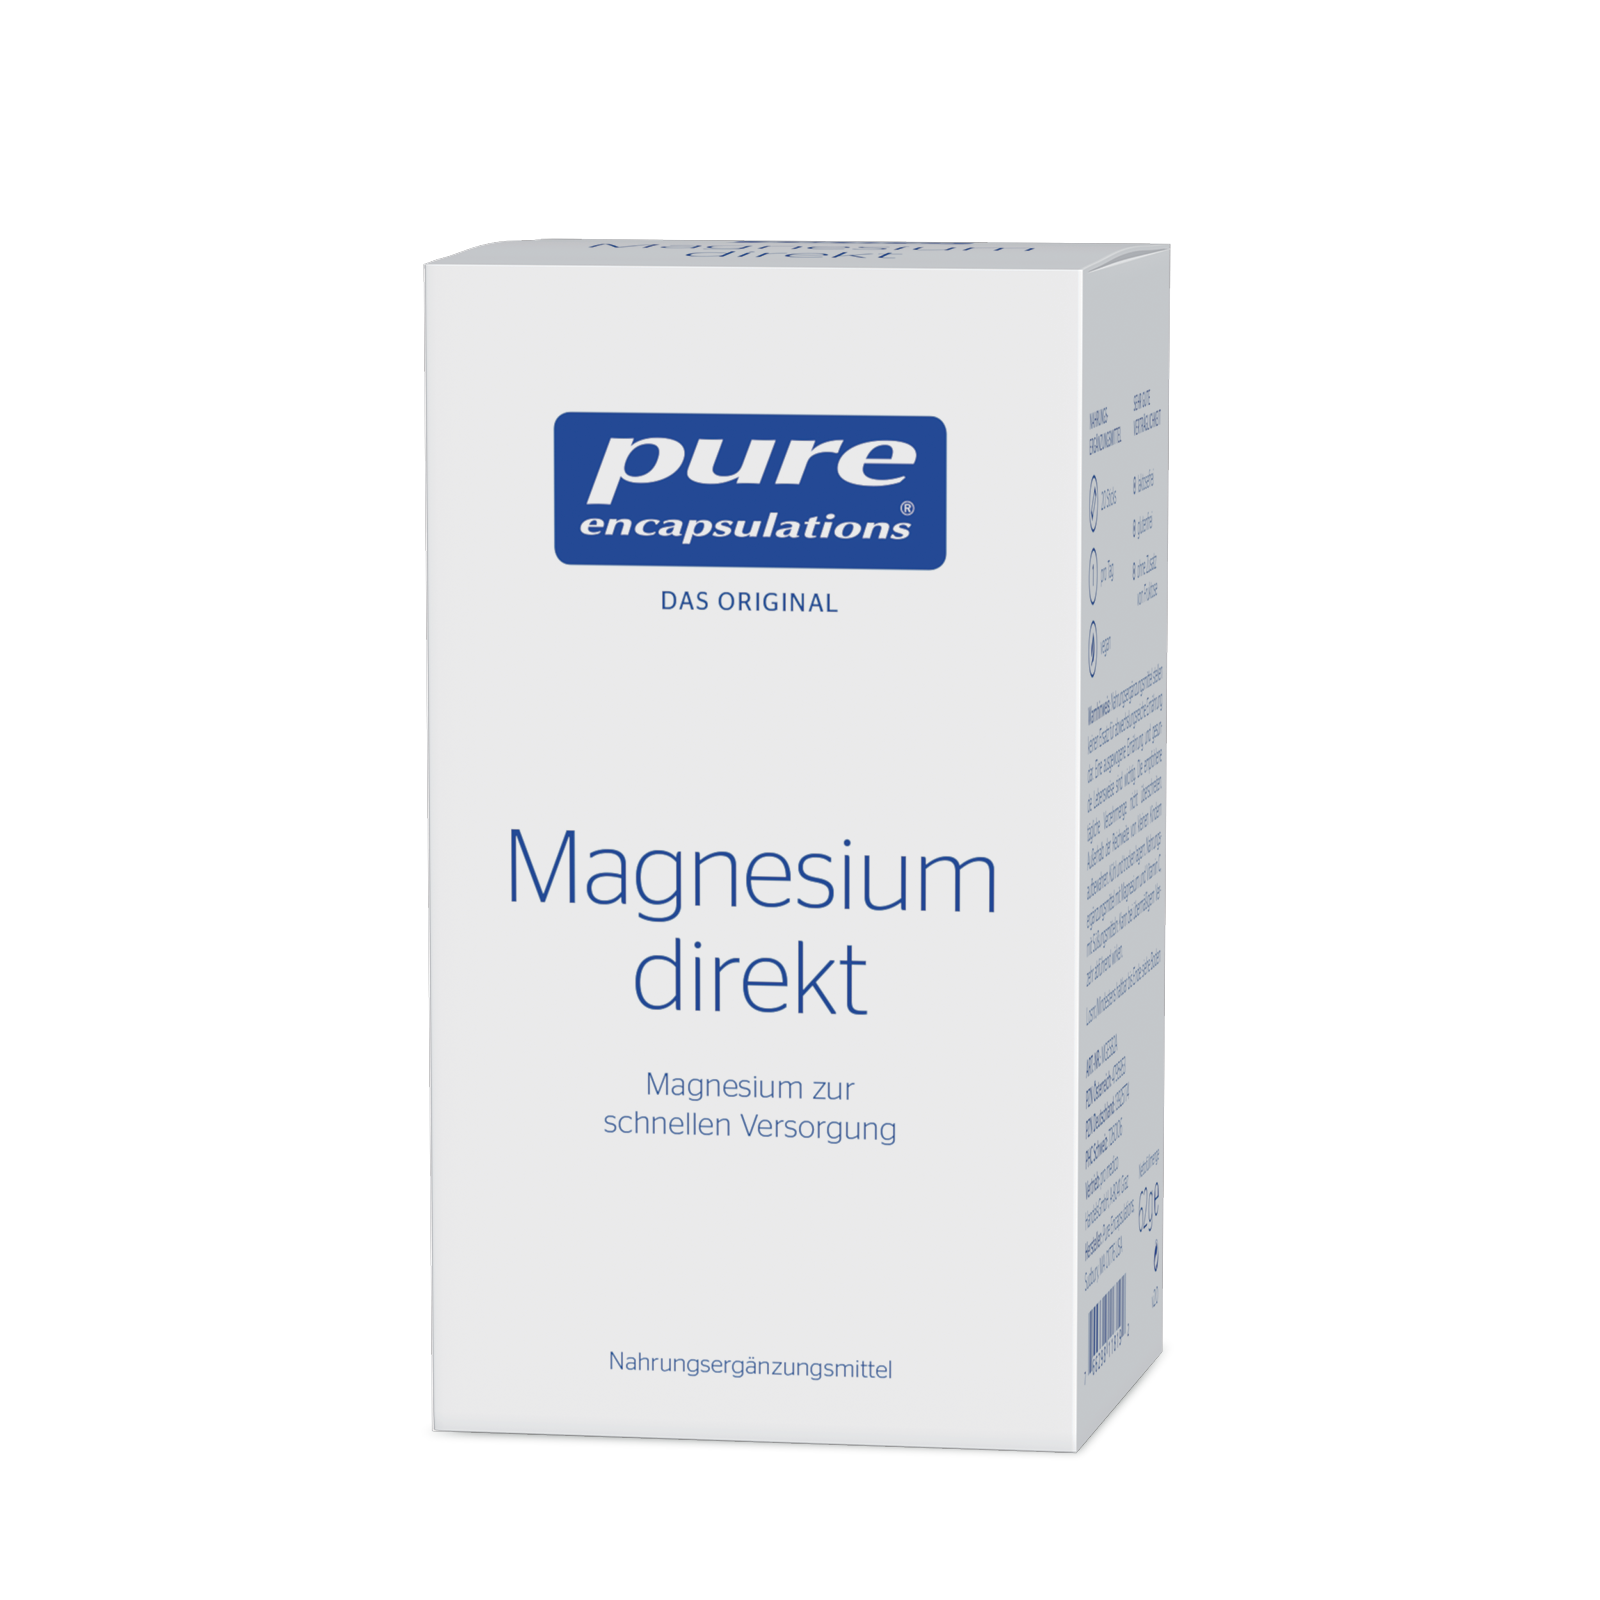 Verpackung Magnesium direkt